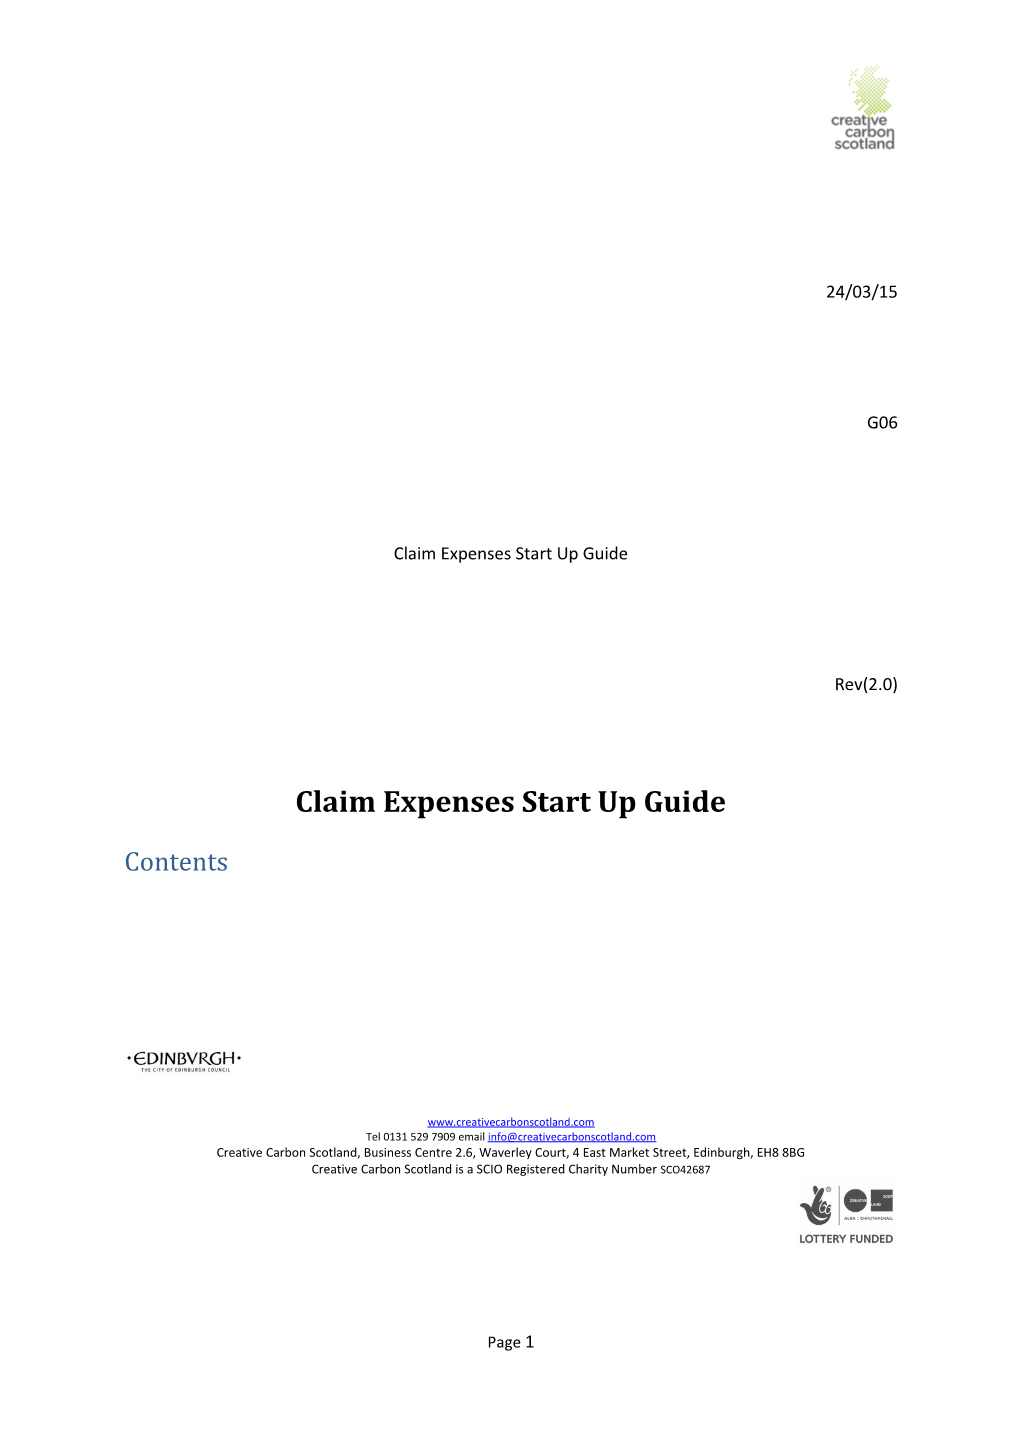 Claim Expenses Start up Guide